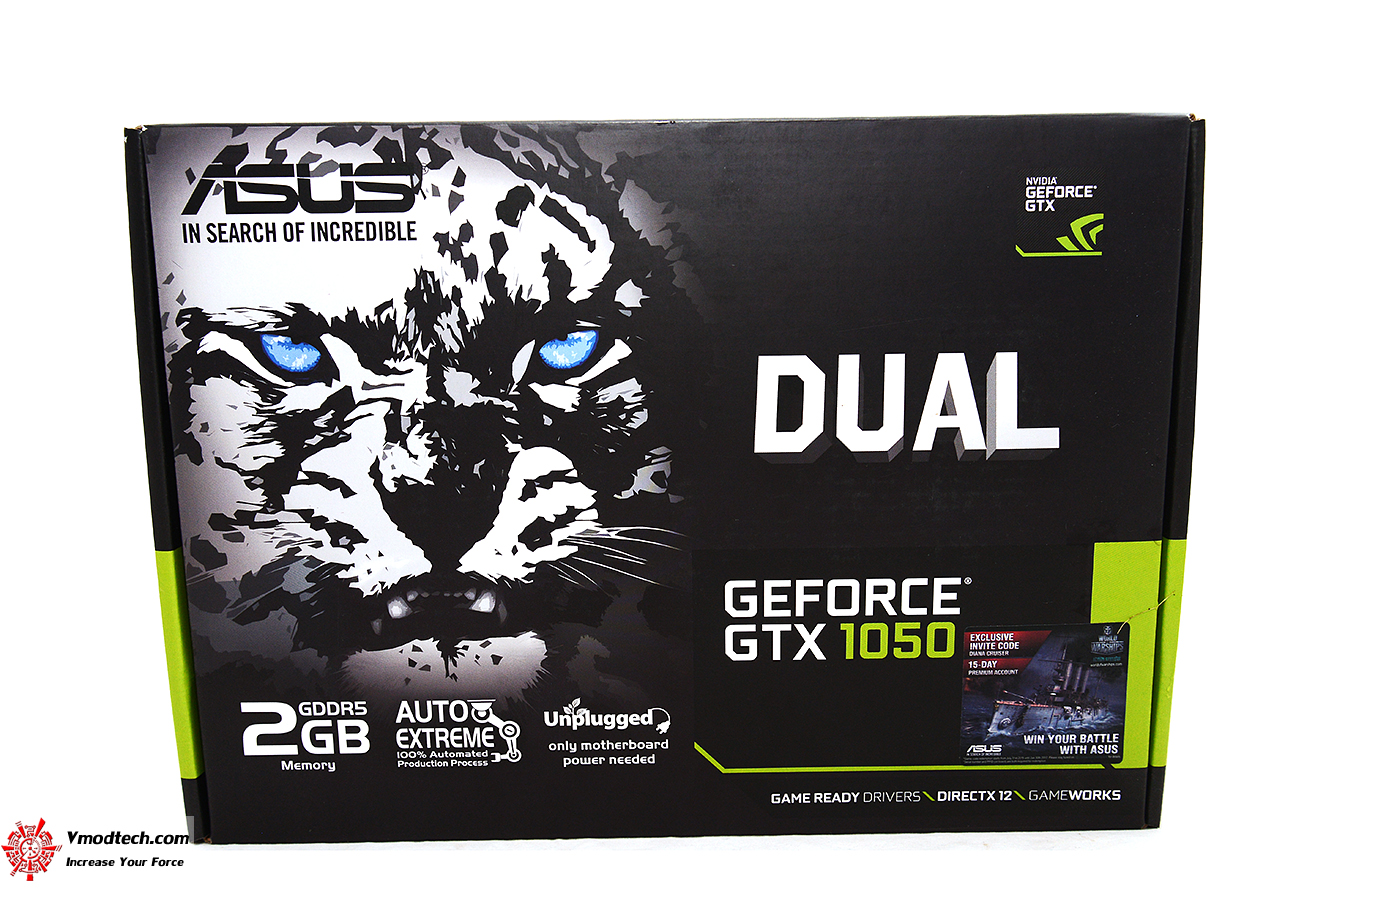 dsc 8808 ASUS GeForce GTX 1050 2GB Dual fan Edition Review